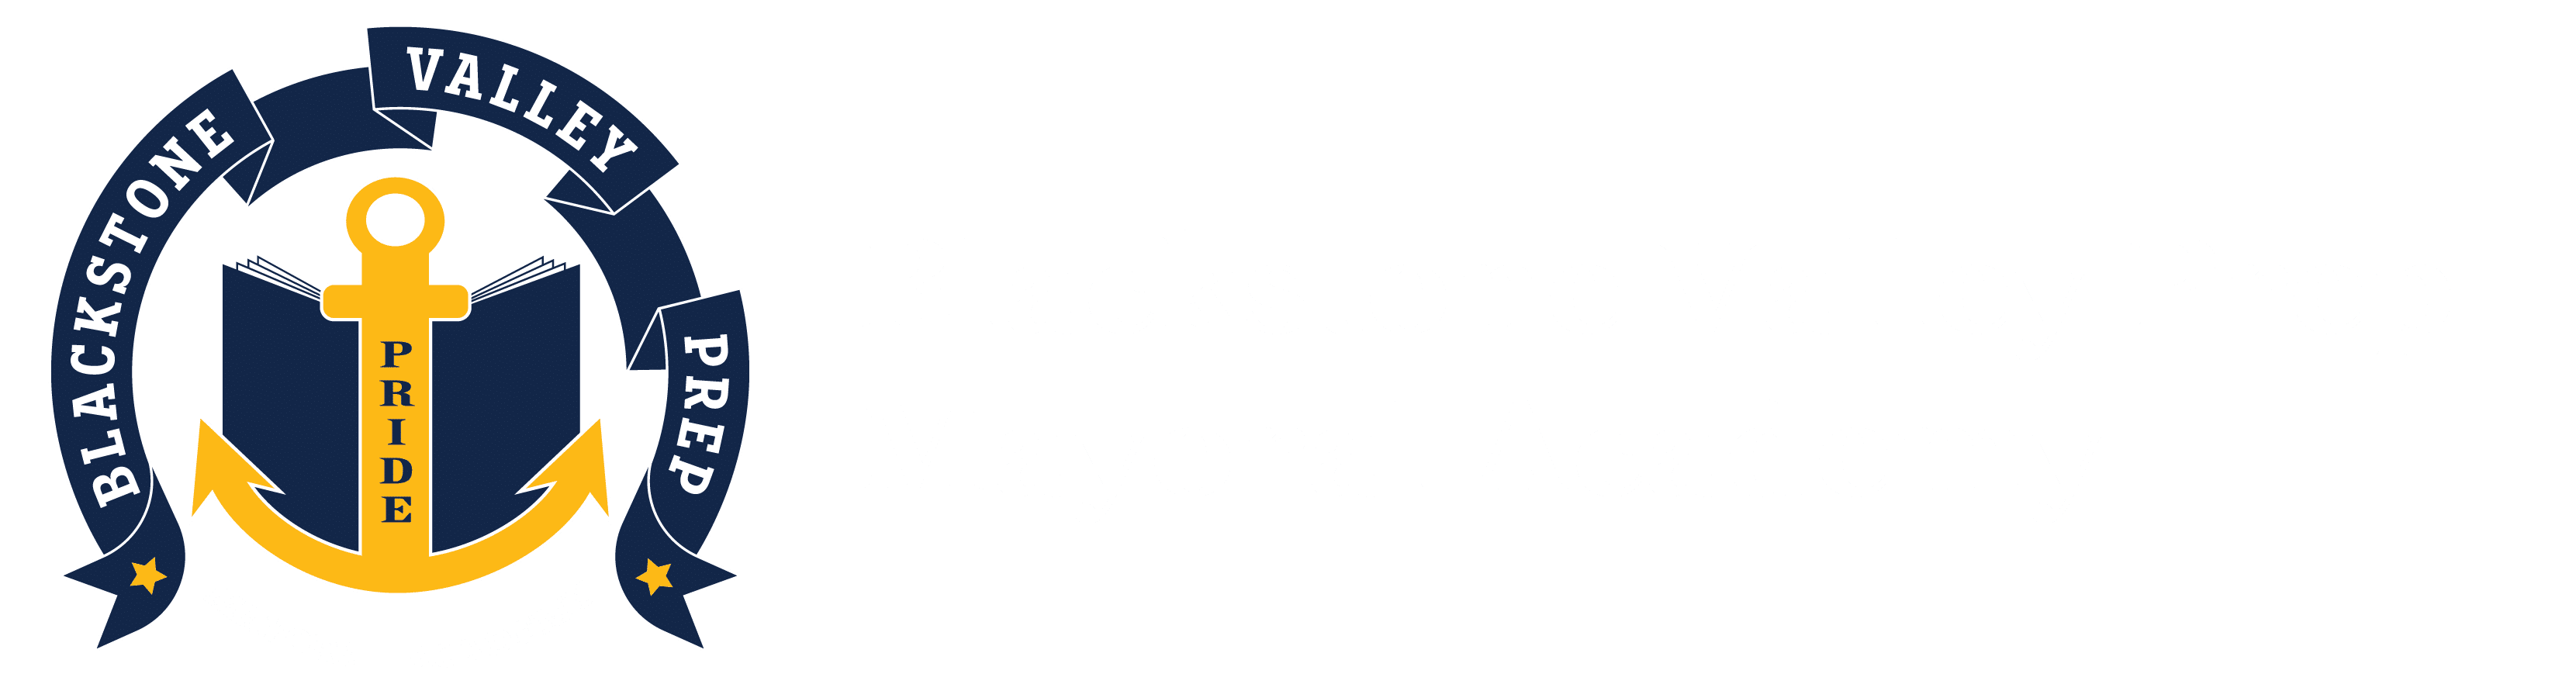 Blackstone Valley Prep Mayoral Academy | Rhode Island Charter School